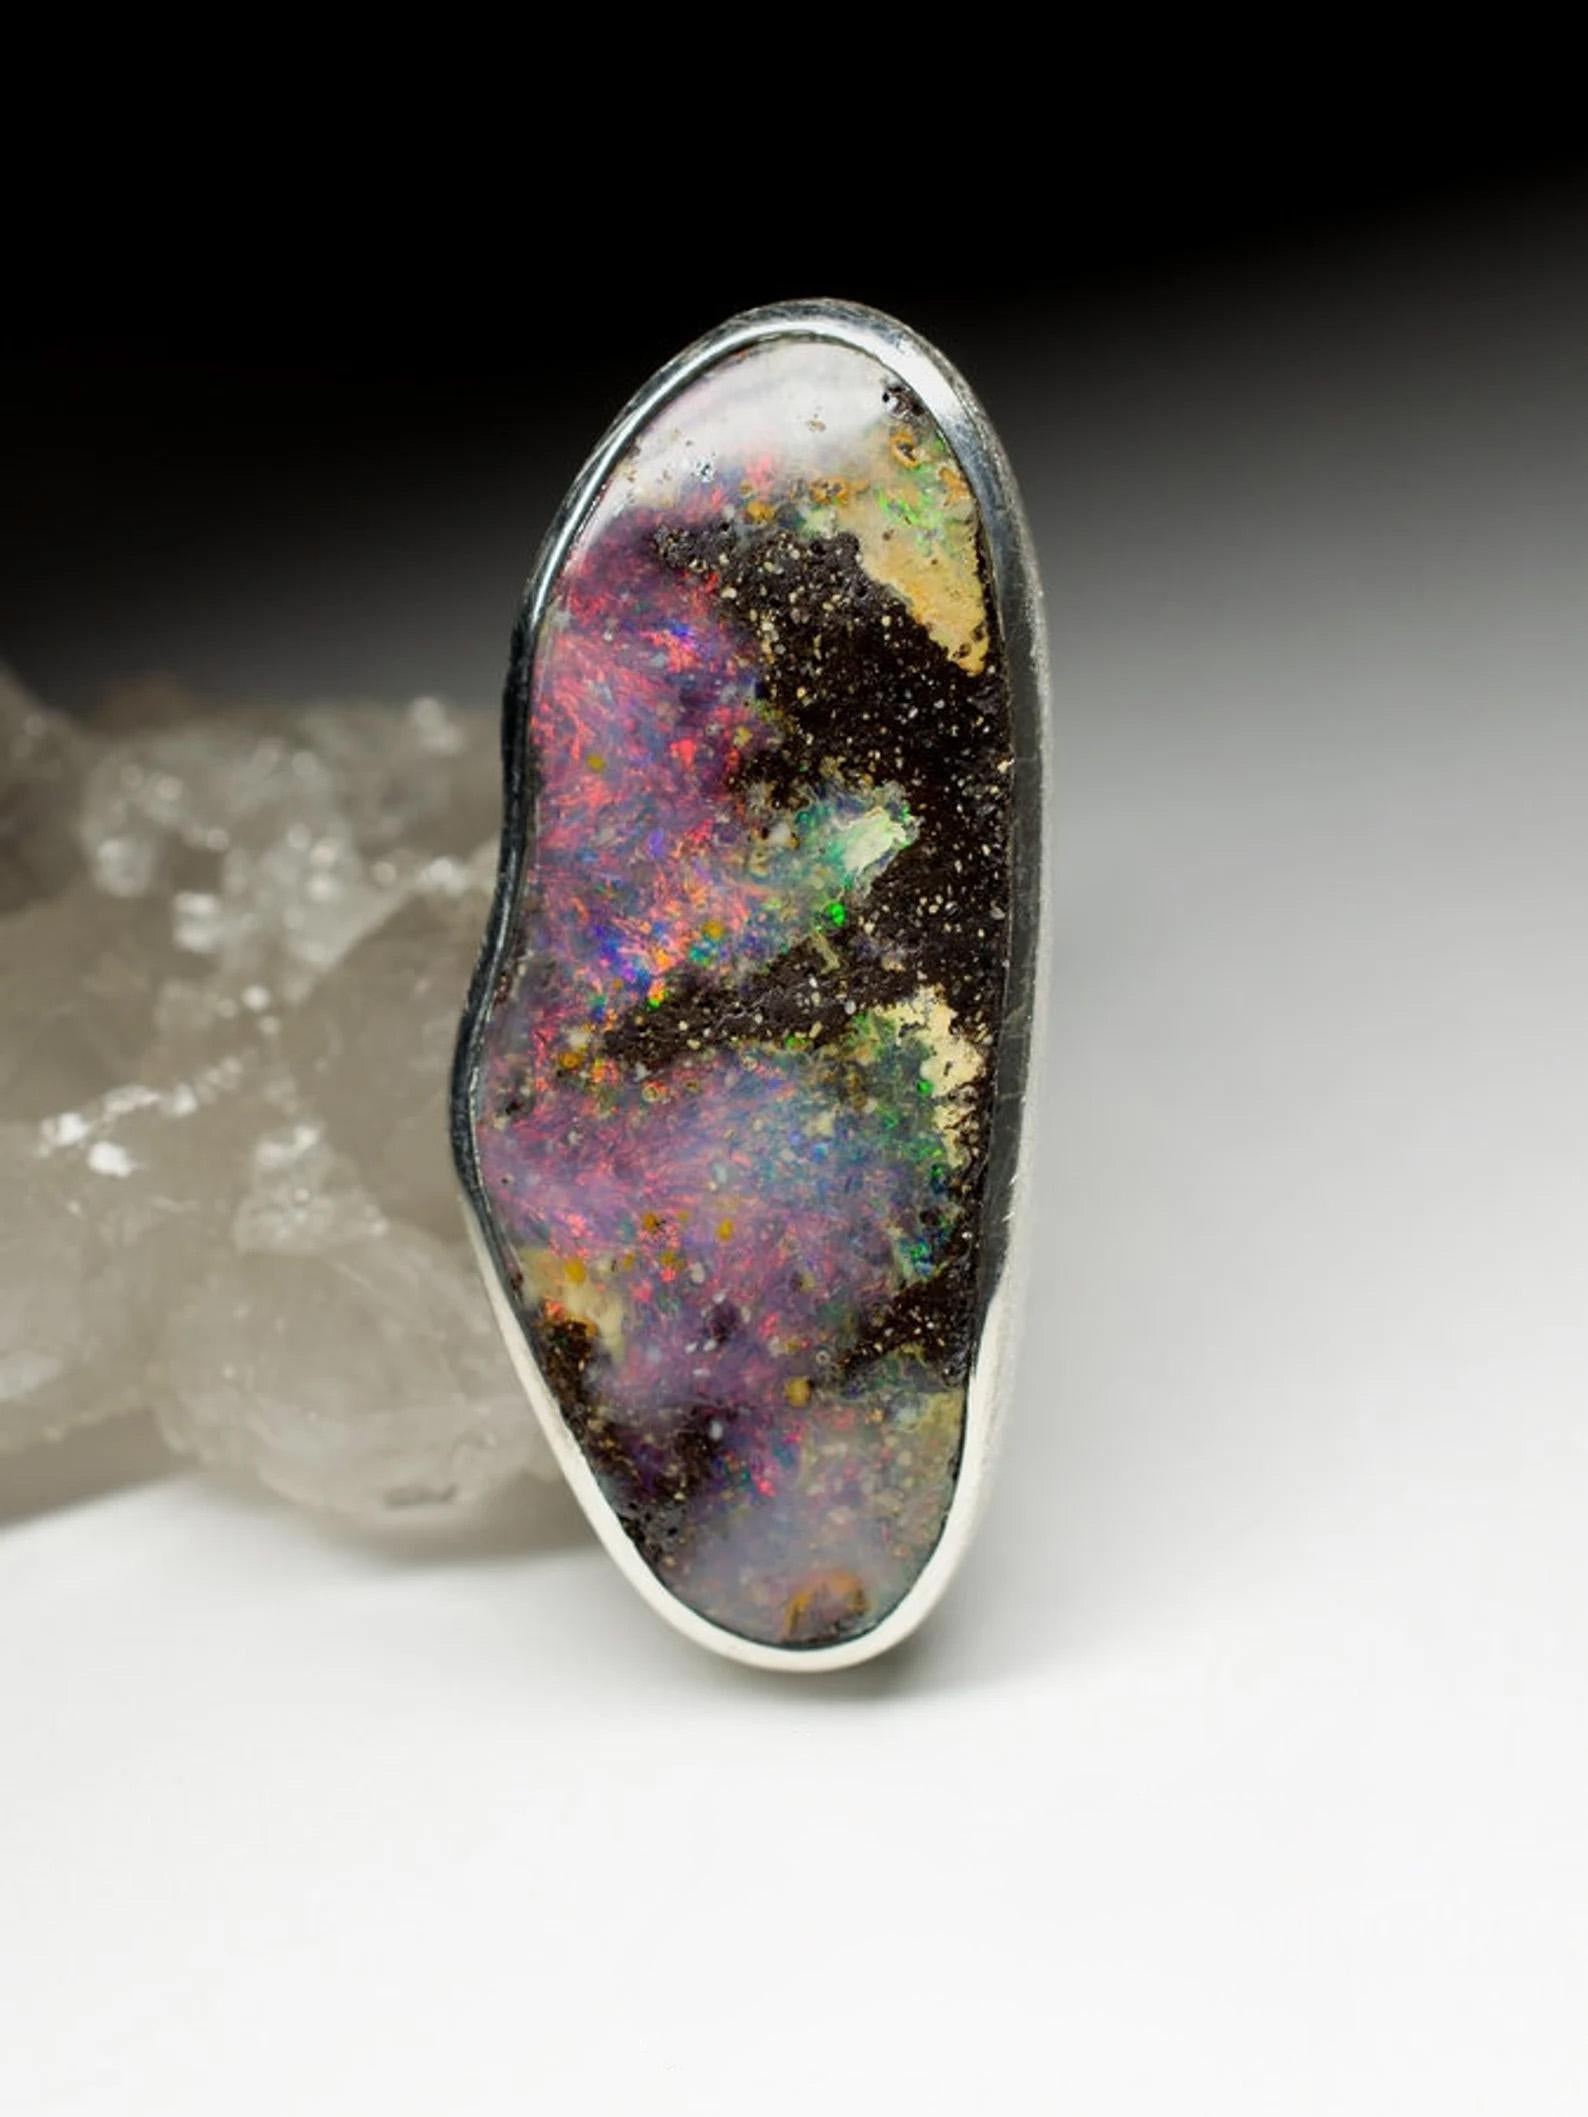 Artisan Large Boulder Opal Ring Natural Polychrome Space Dust Purple Pink Gemstone